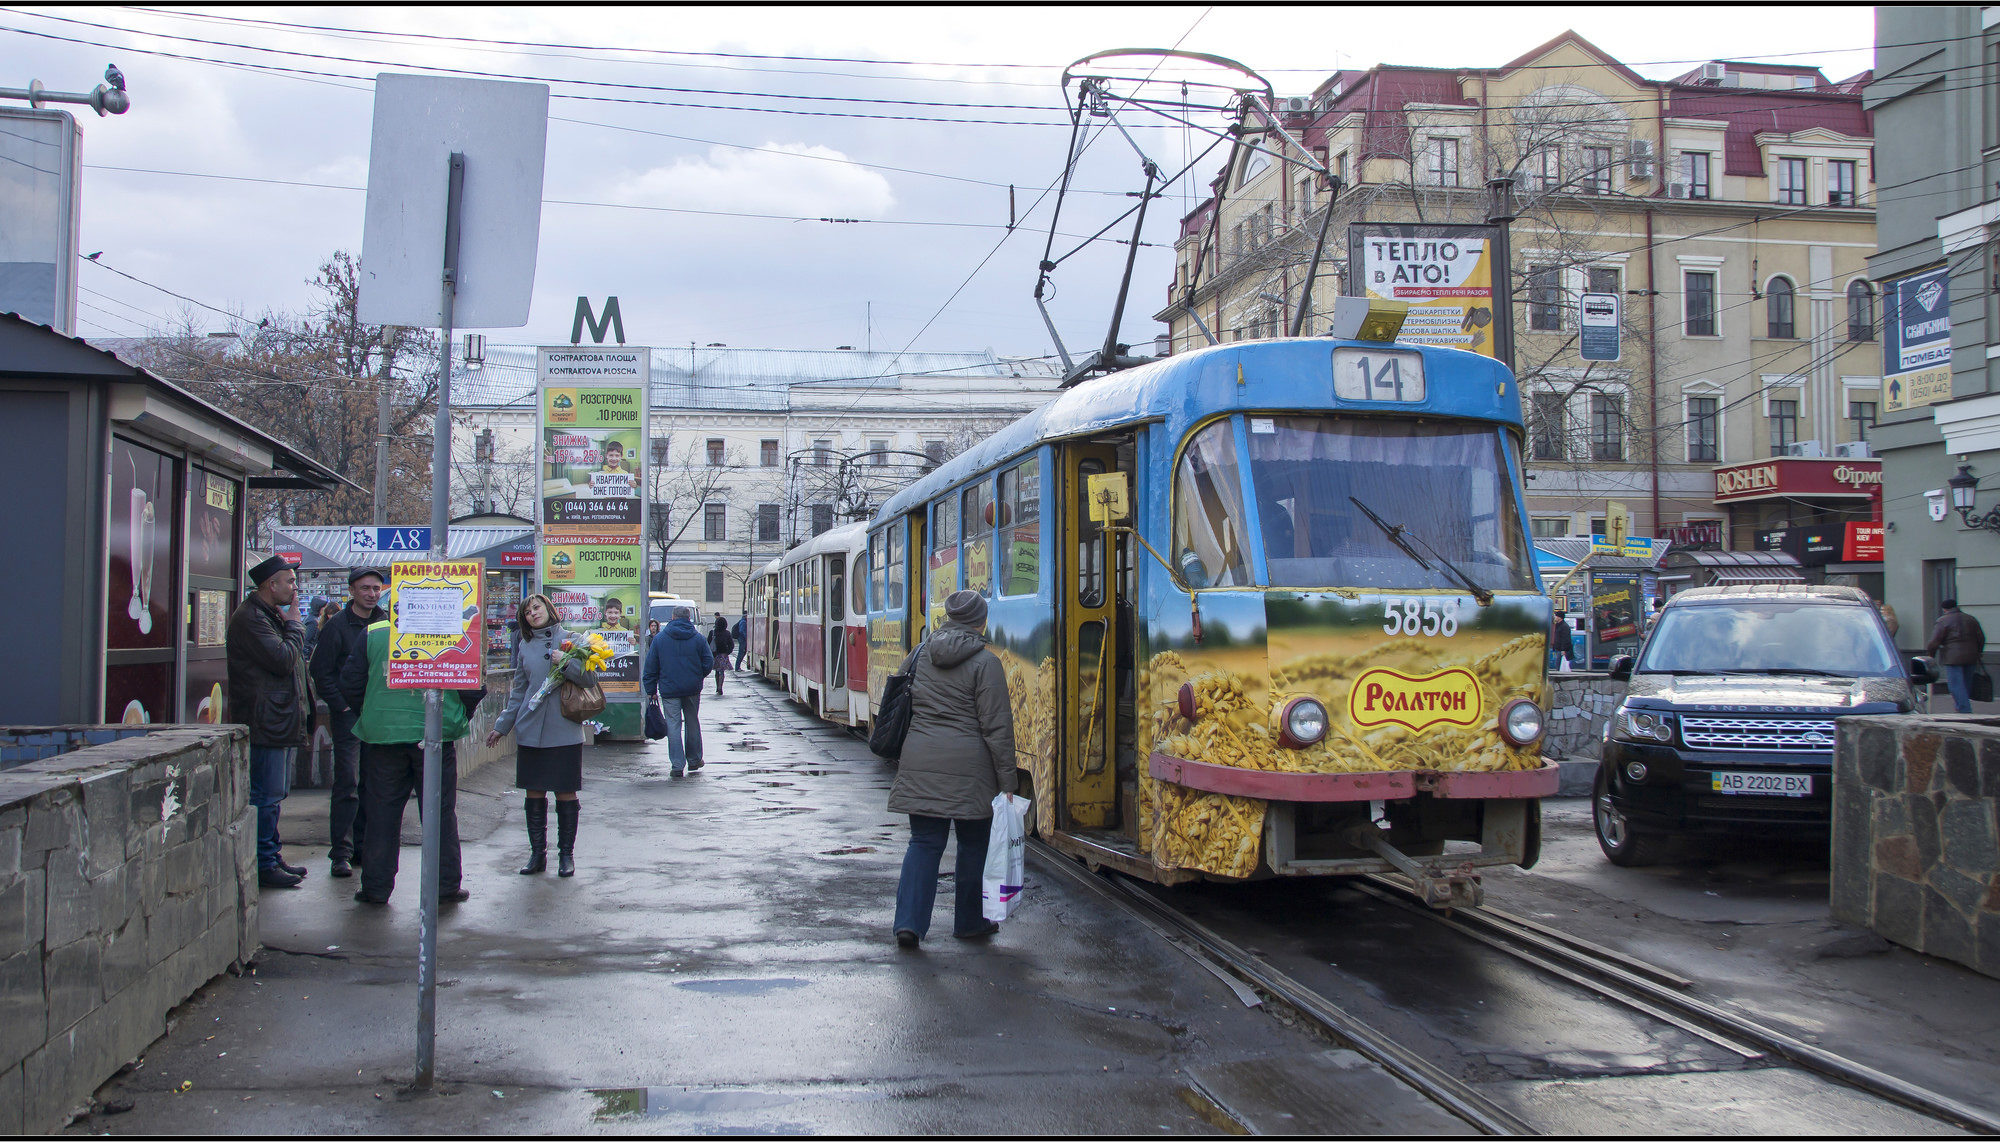 Kiev street scene - by Bert Kaufmann